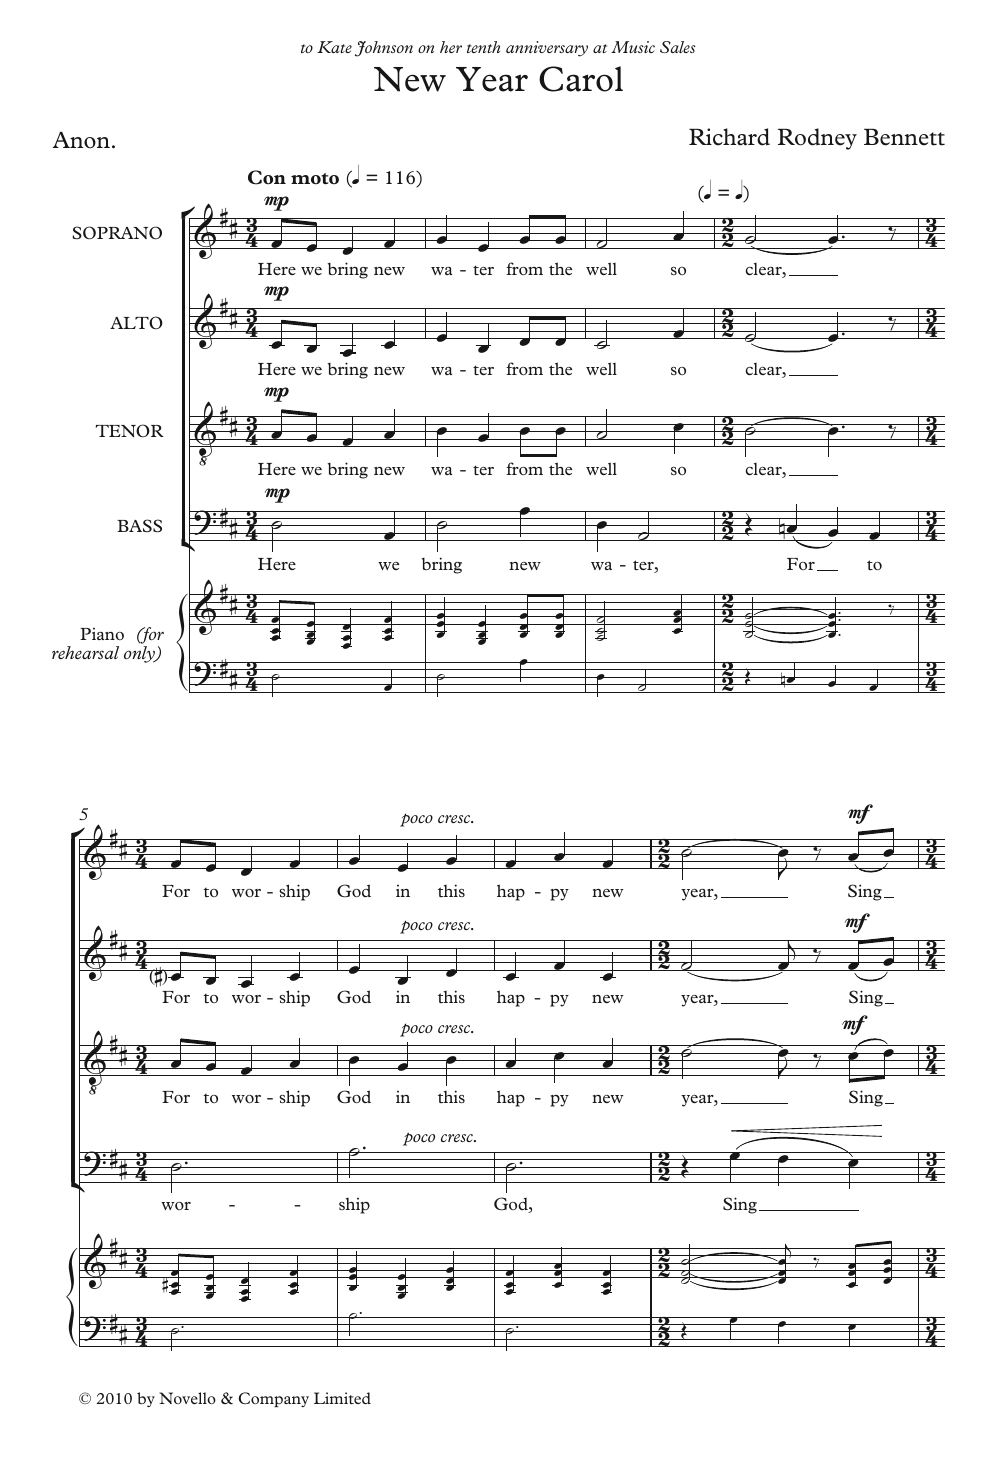 Richard Rodney Bennett New Year Carol Sheet Music Notes & Chords for Choir - Download or Print PDF